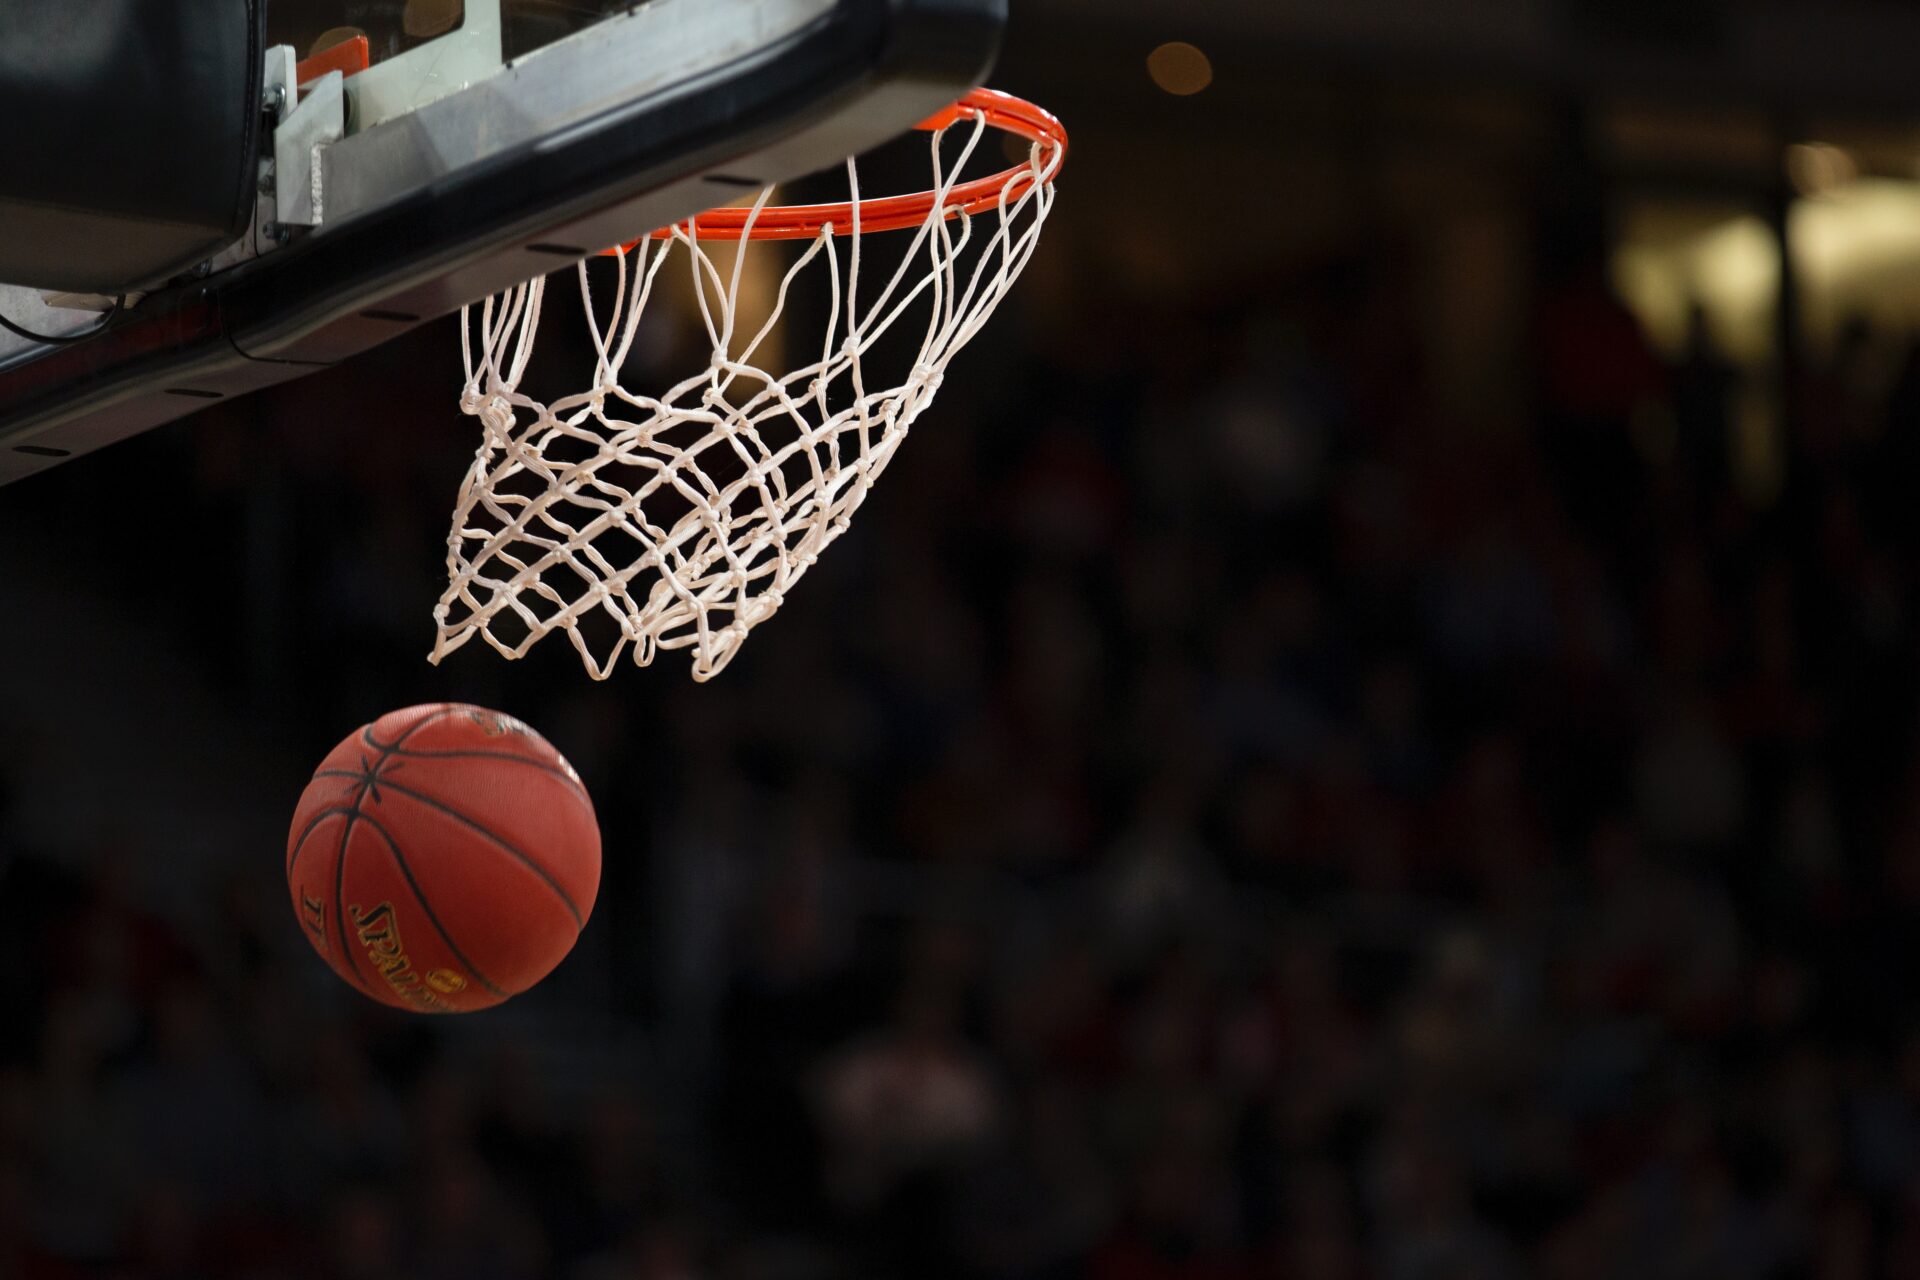 A basketball going through the mesh of a hoop.